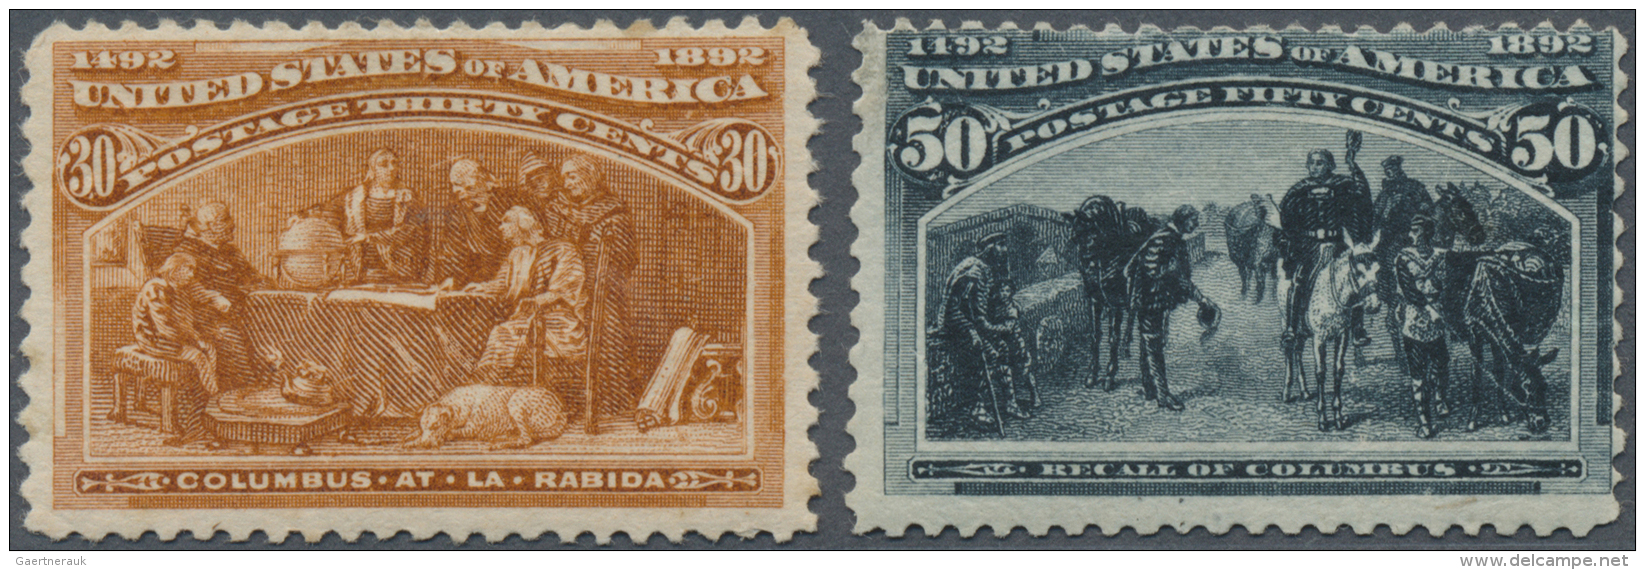 Vereinigte Staaten Von Amerika: 1893, Columbus, 30c. Orange Brown And 50c. Slate, Two Values, Fresh Colours, Mint O.g., - Ongebruikt